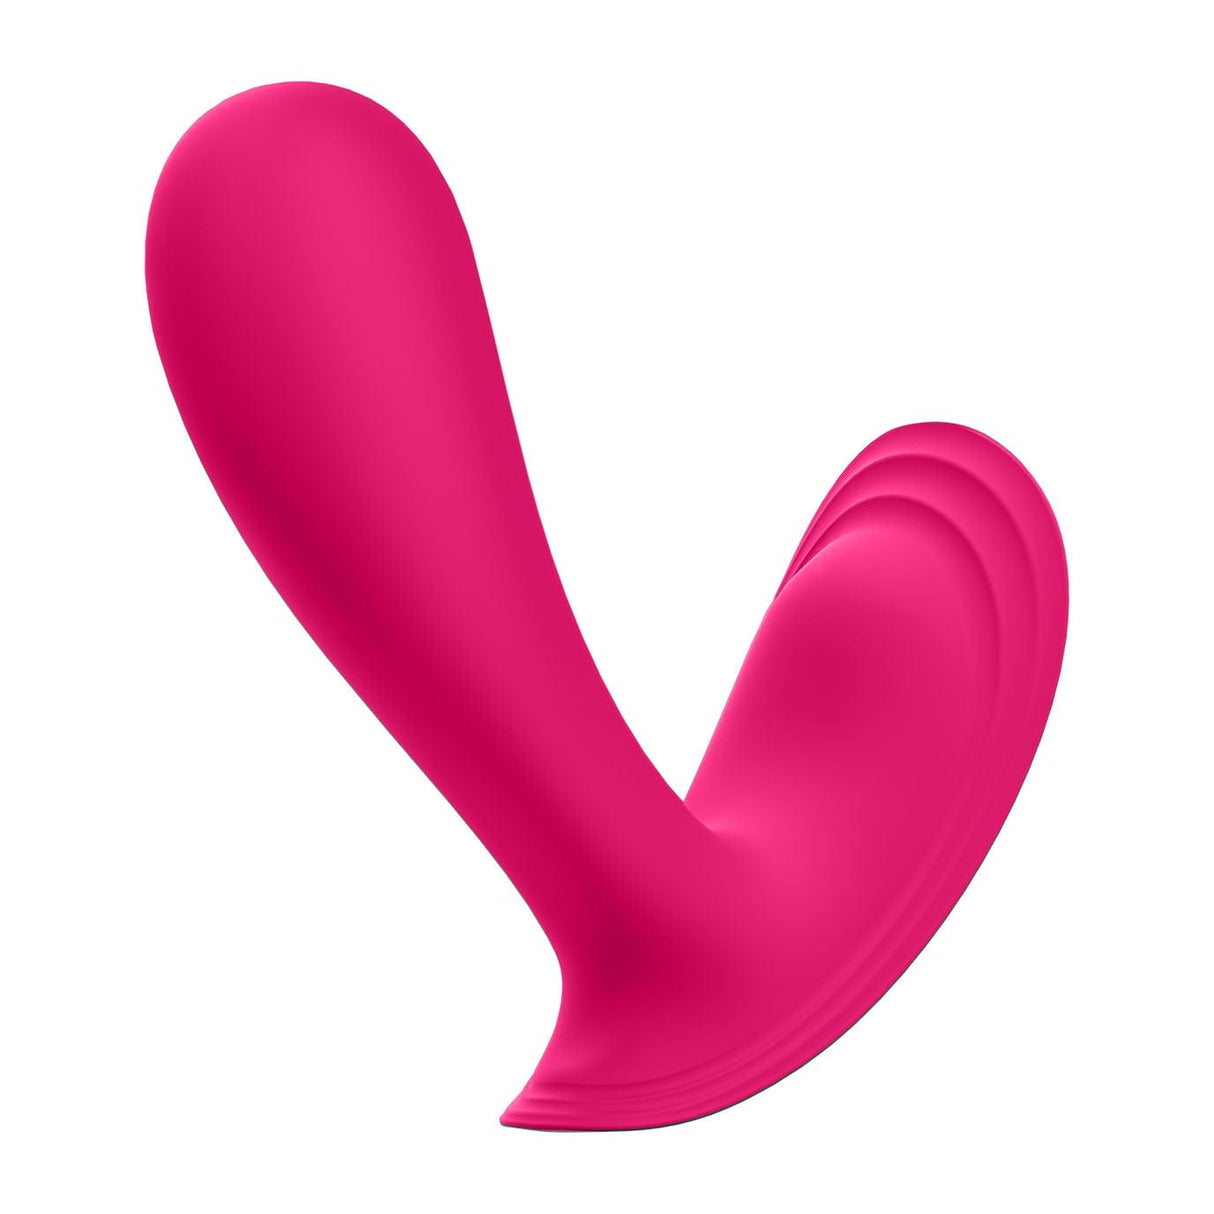 Satisfyer - Top Secret App-Controlled Wearable G-spot Vibrator (Pink) STF1211 CherryAffairs